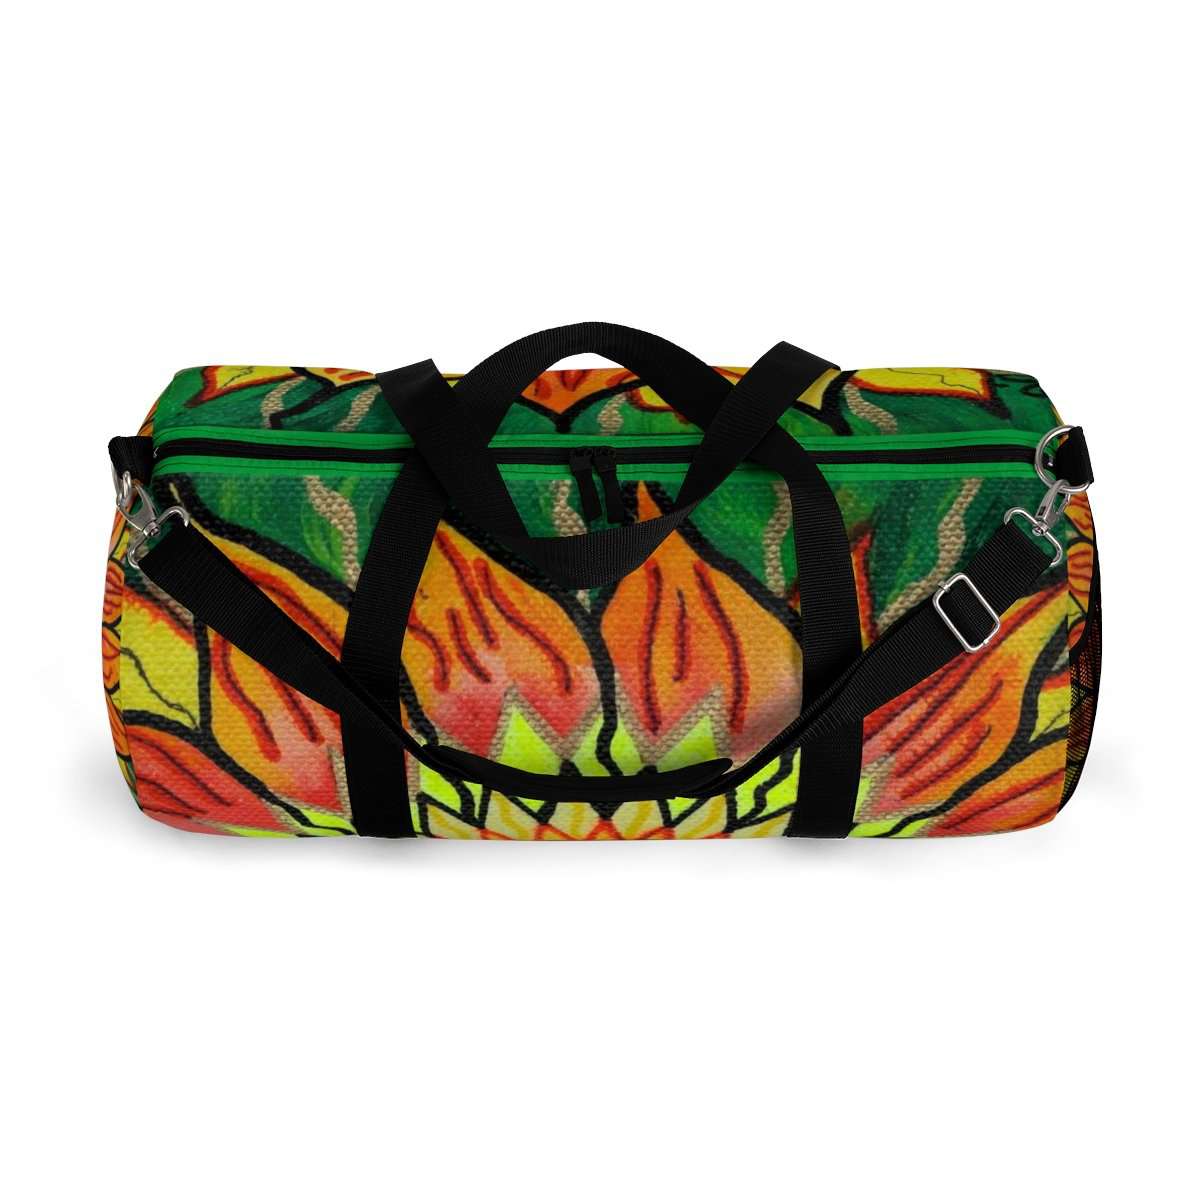 Slunečnice - Duffle Bag